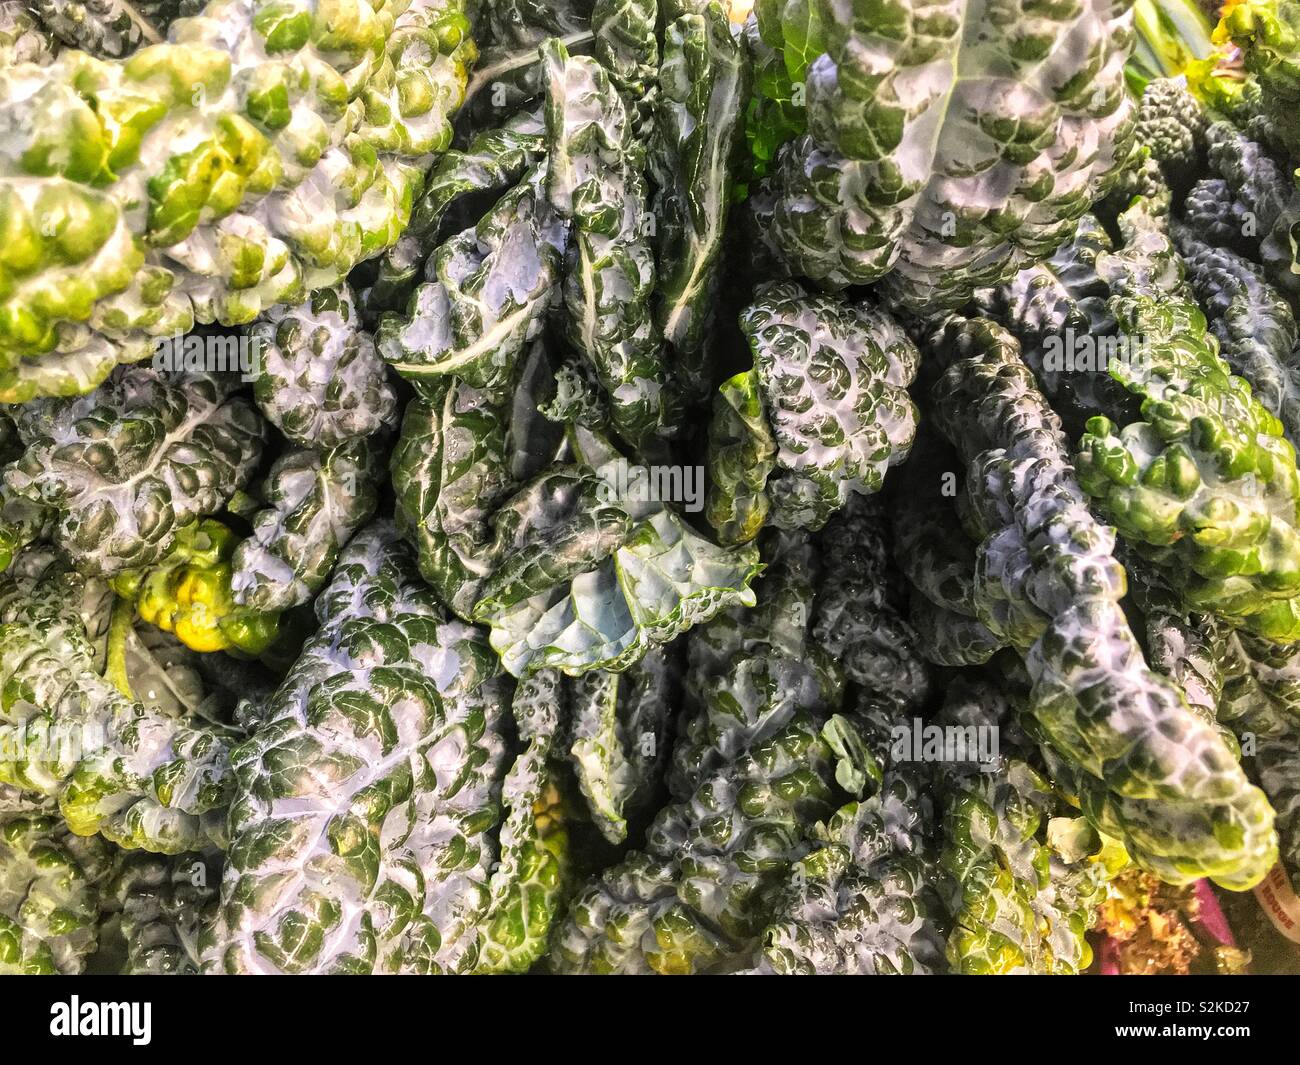 Fresh delicious tasty ripe Tuscan kale, Tuscan cabbage, Italian kale, dinosaur kale, kale, flat back cabbage, Lacinato kale, palm tree kale, cavolo nero, or black Tuscan palm. Stock Photo